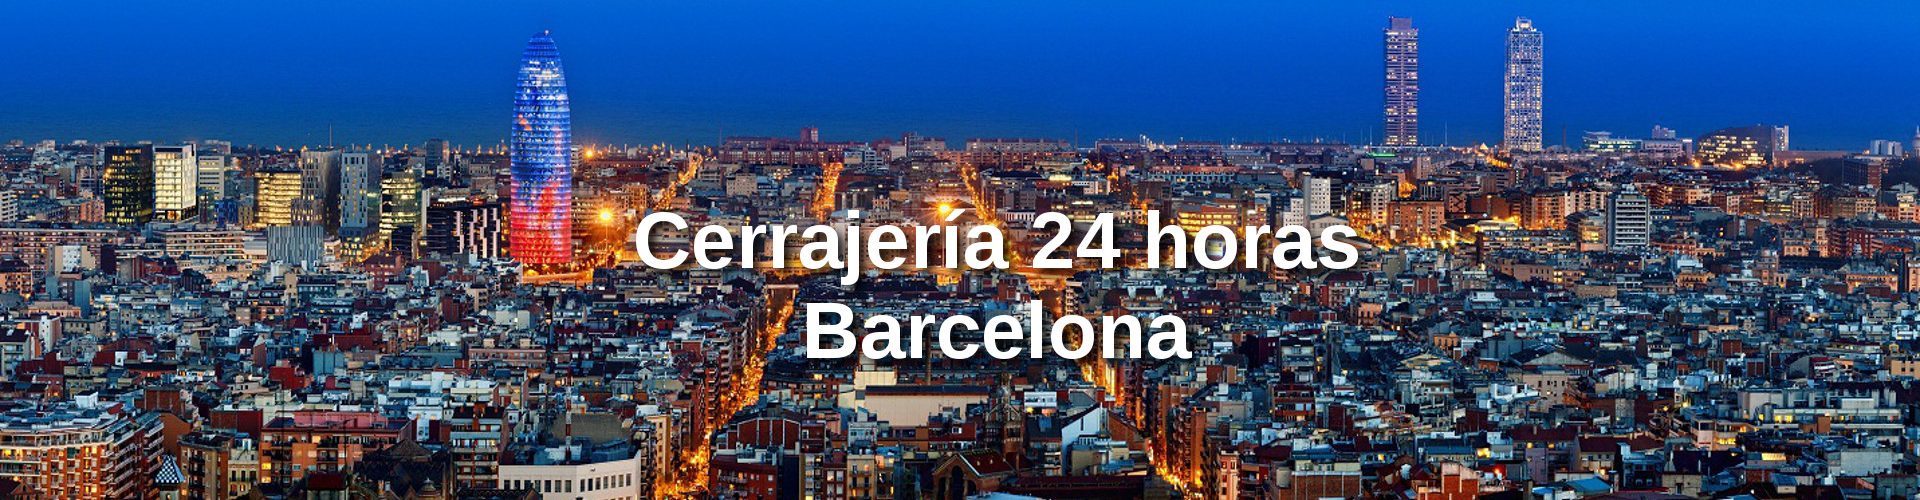 barcelona-home